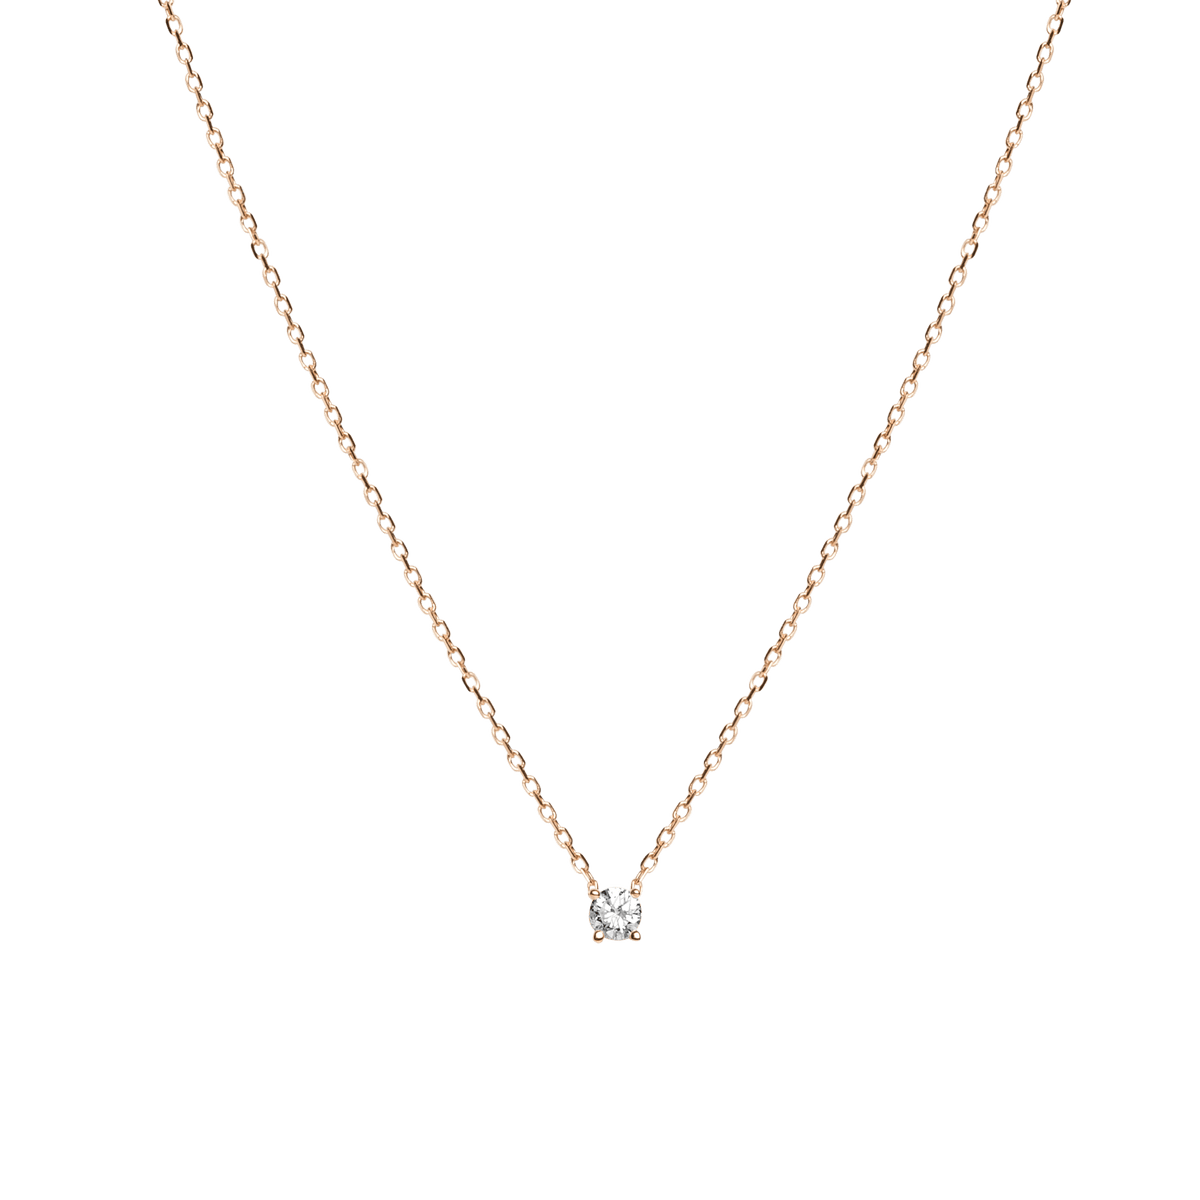 Diamond Necklaces & Pendants Buying Guide